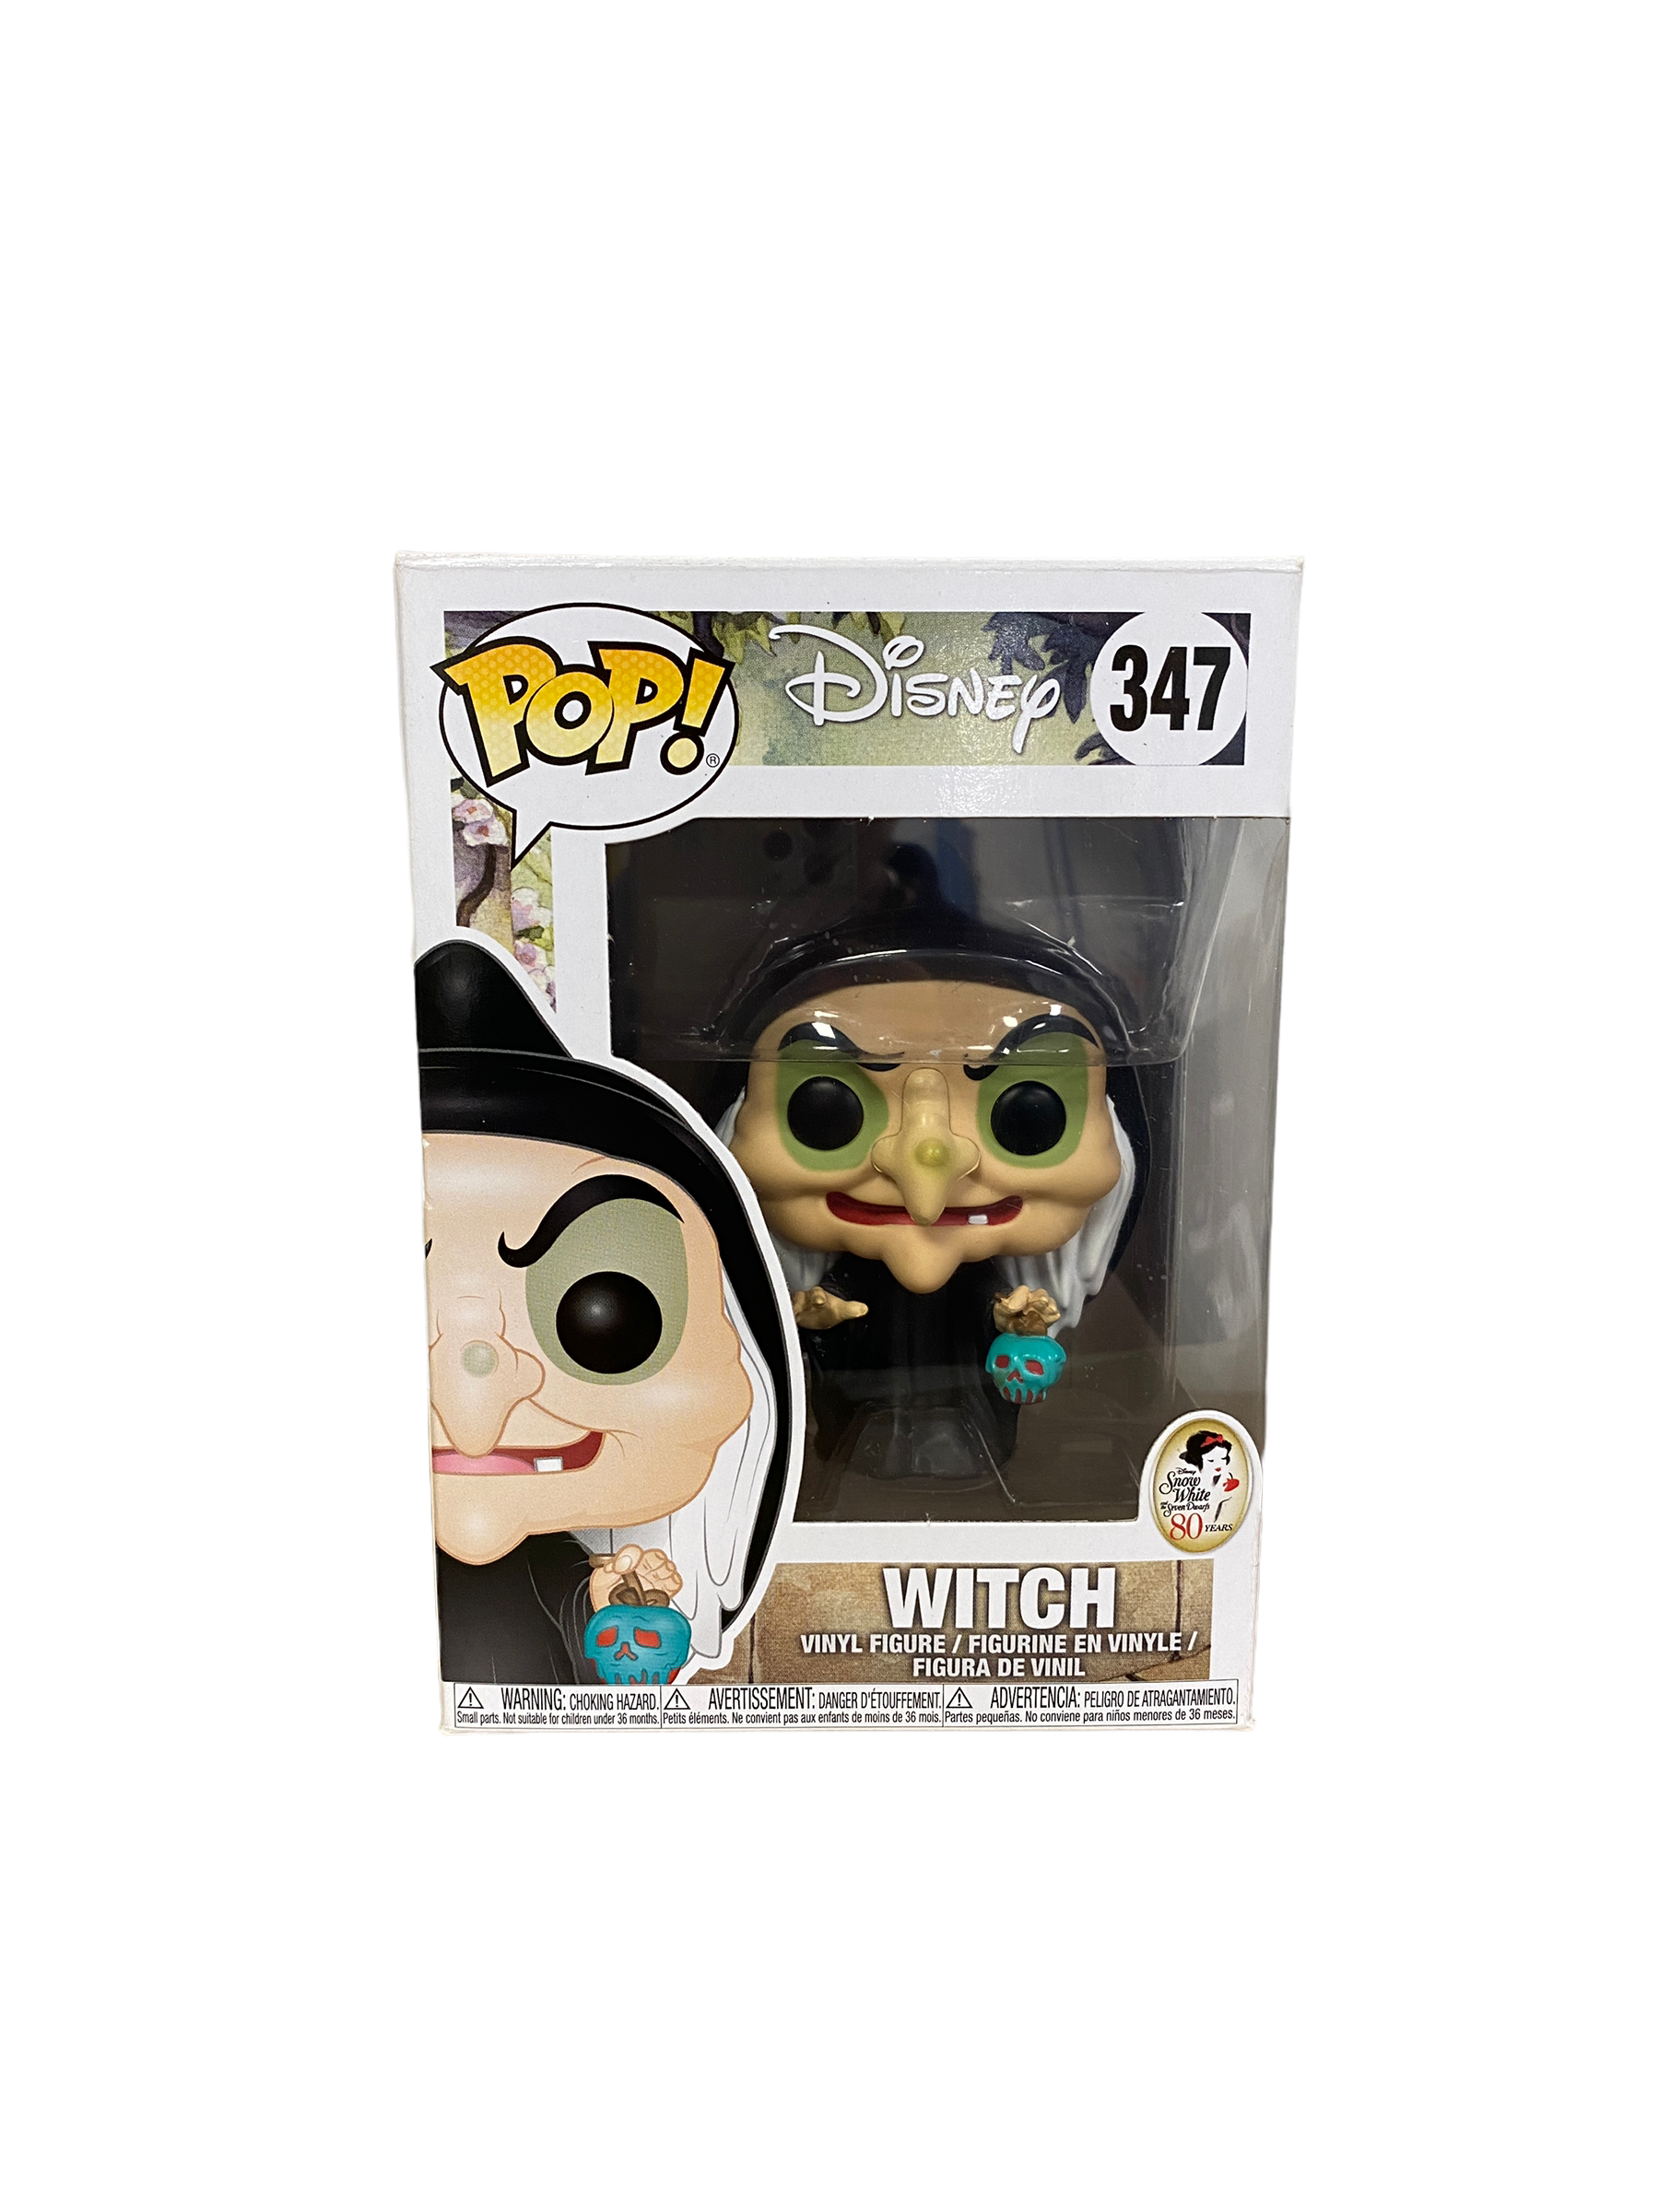 Witch #347 Funko Pop! - Disney - 2017 Pop! - Condition 8.5/10